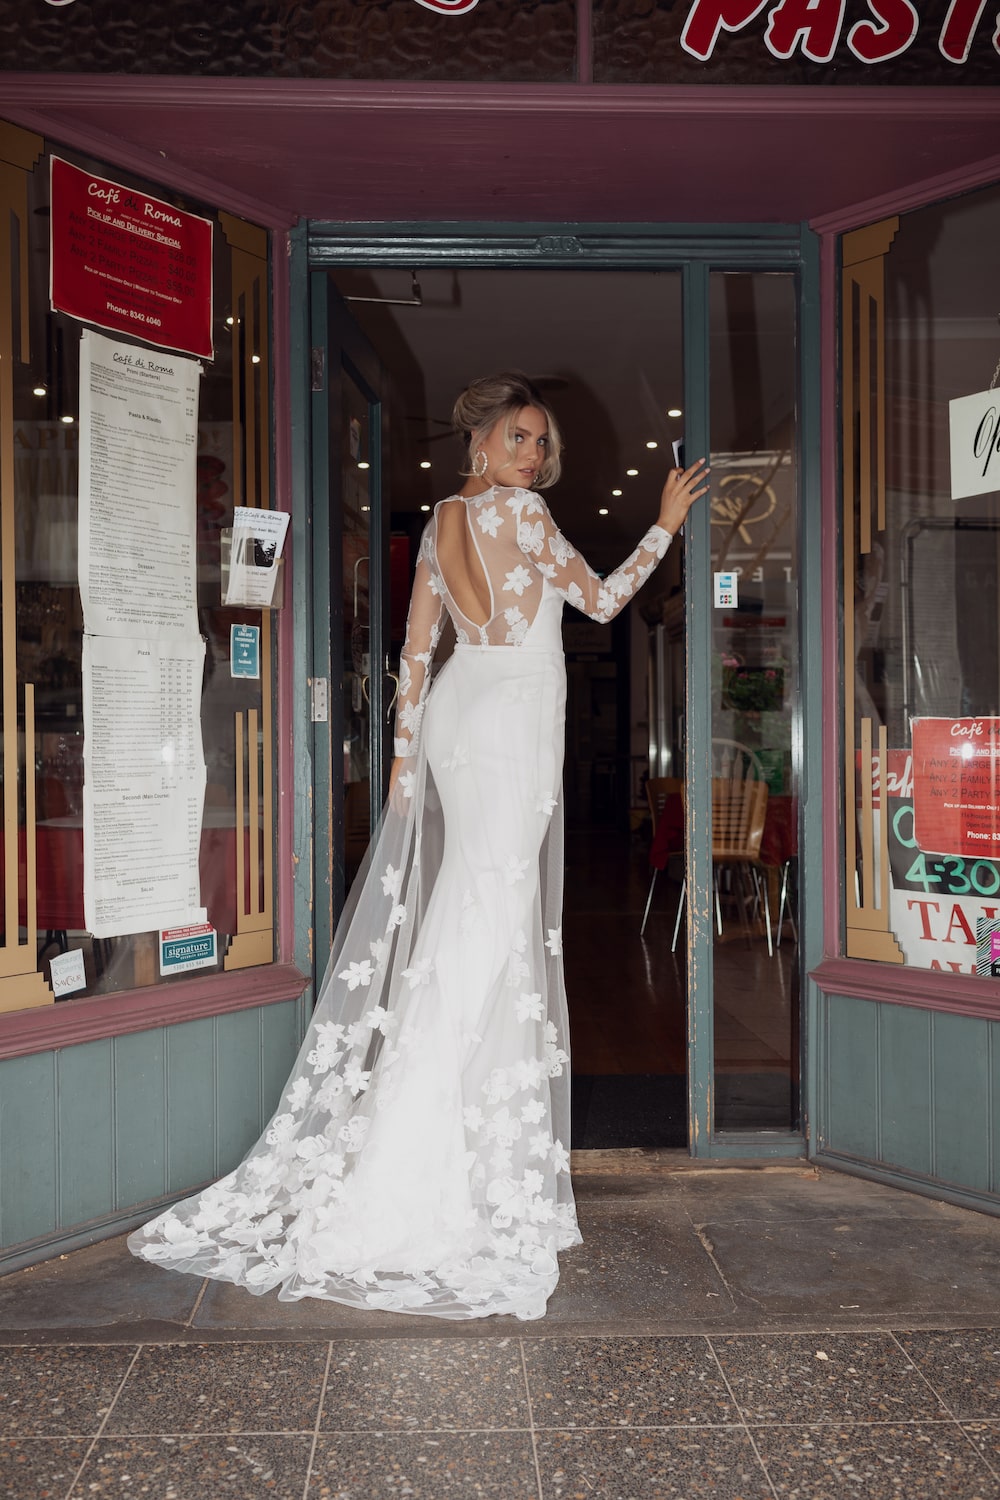 Bride walking through doorway of Italian cafe, looking back at camera, wearing the Tivoli gown.